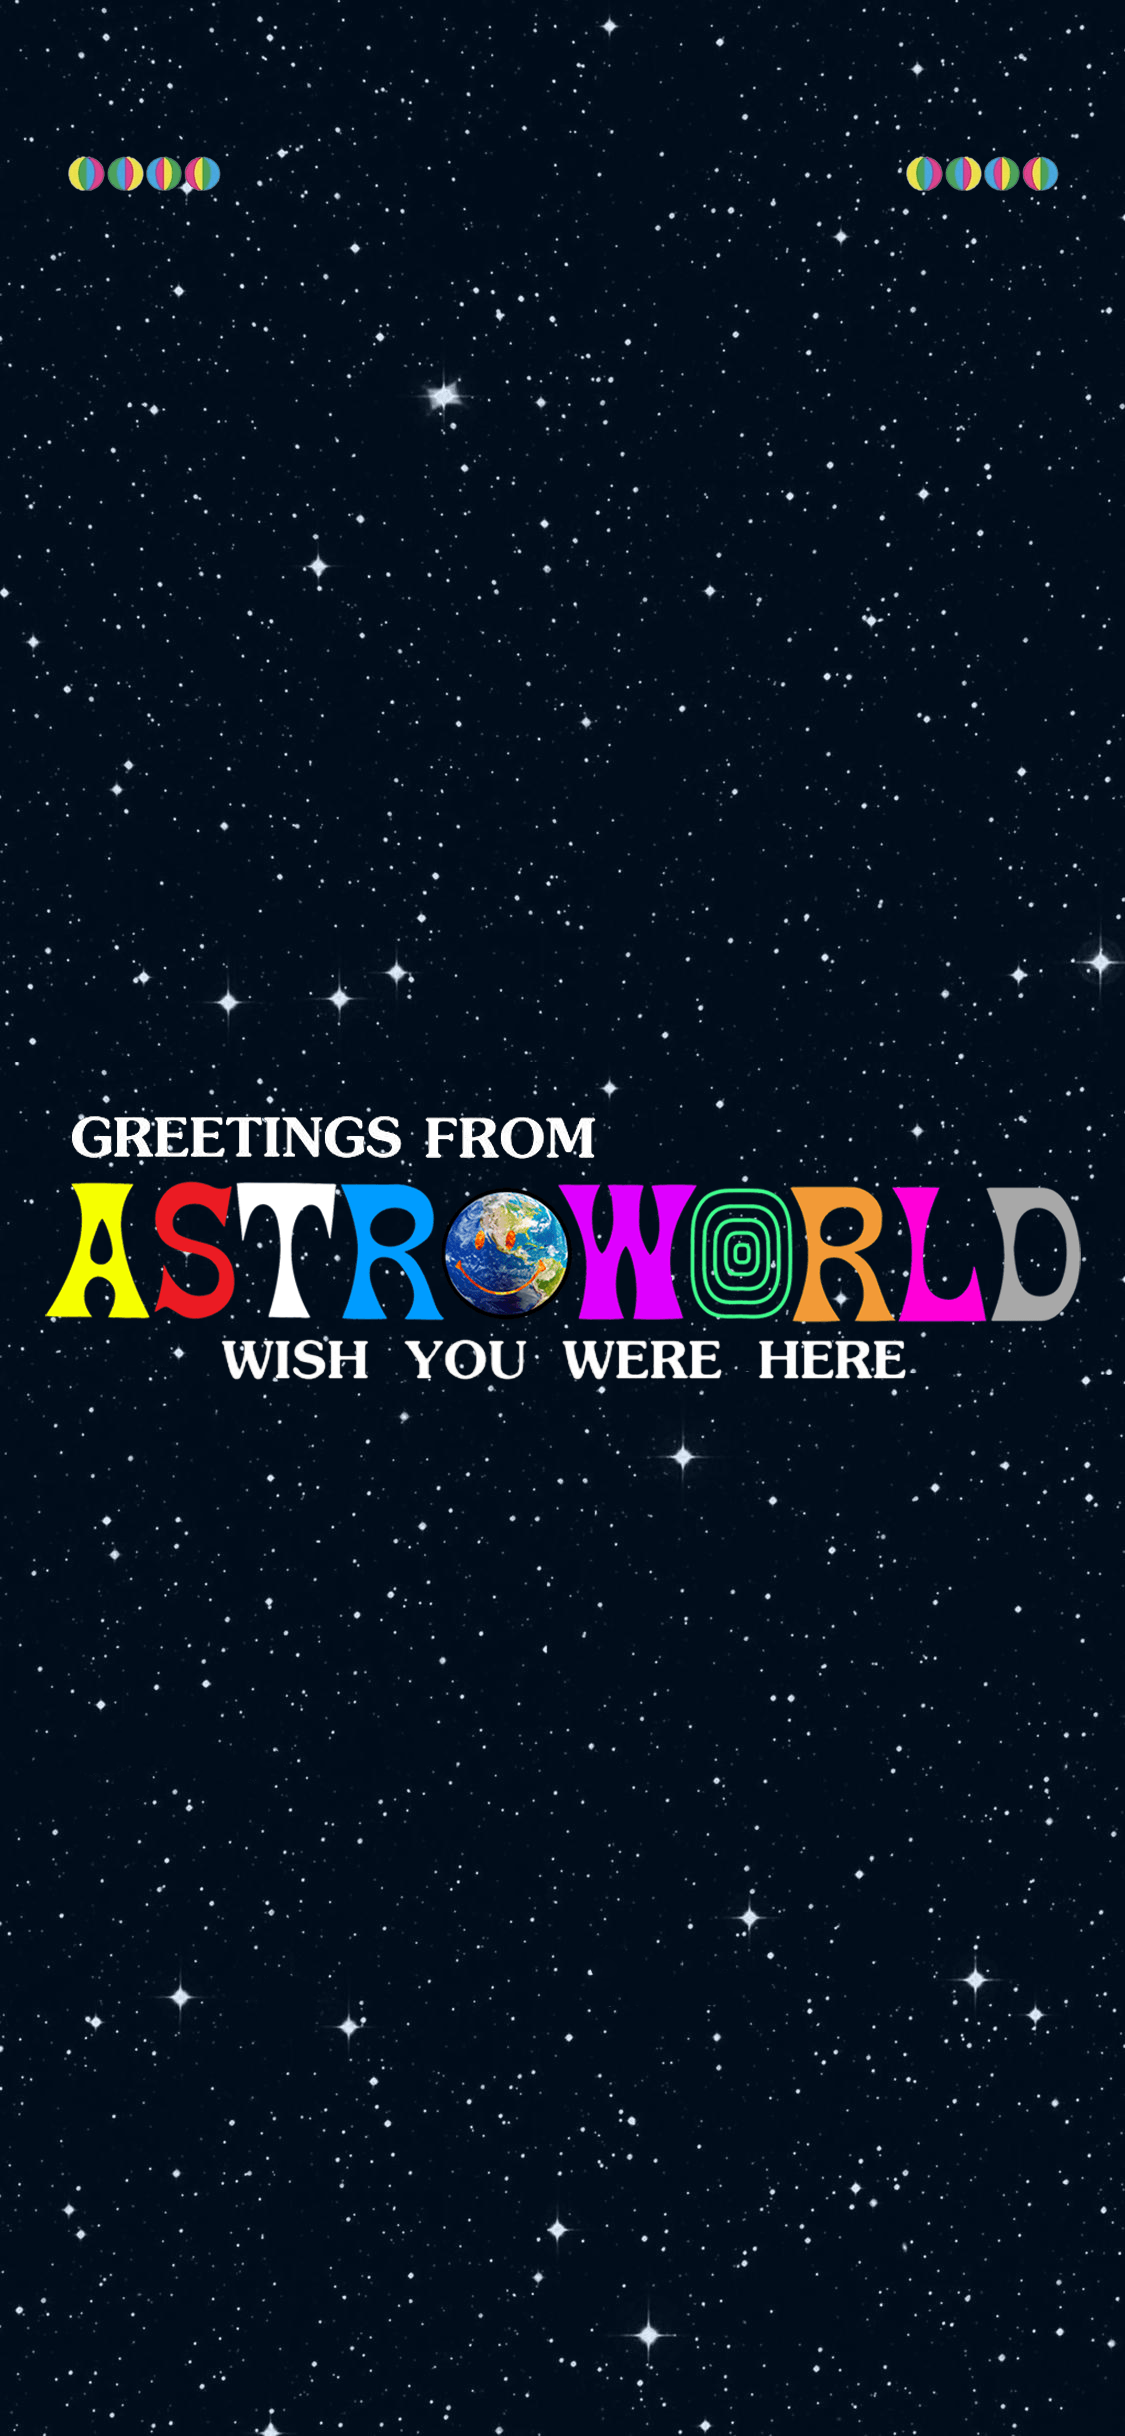 Image] Astroworld iPhone X Wallpaper (Lock Screen) [1125 × 2436